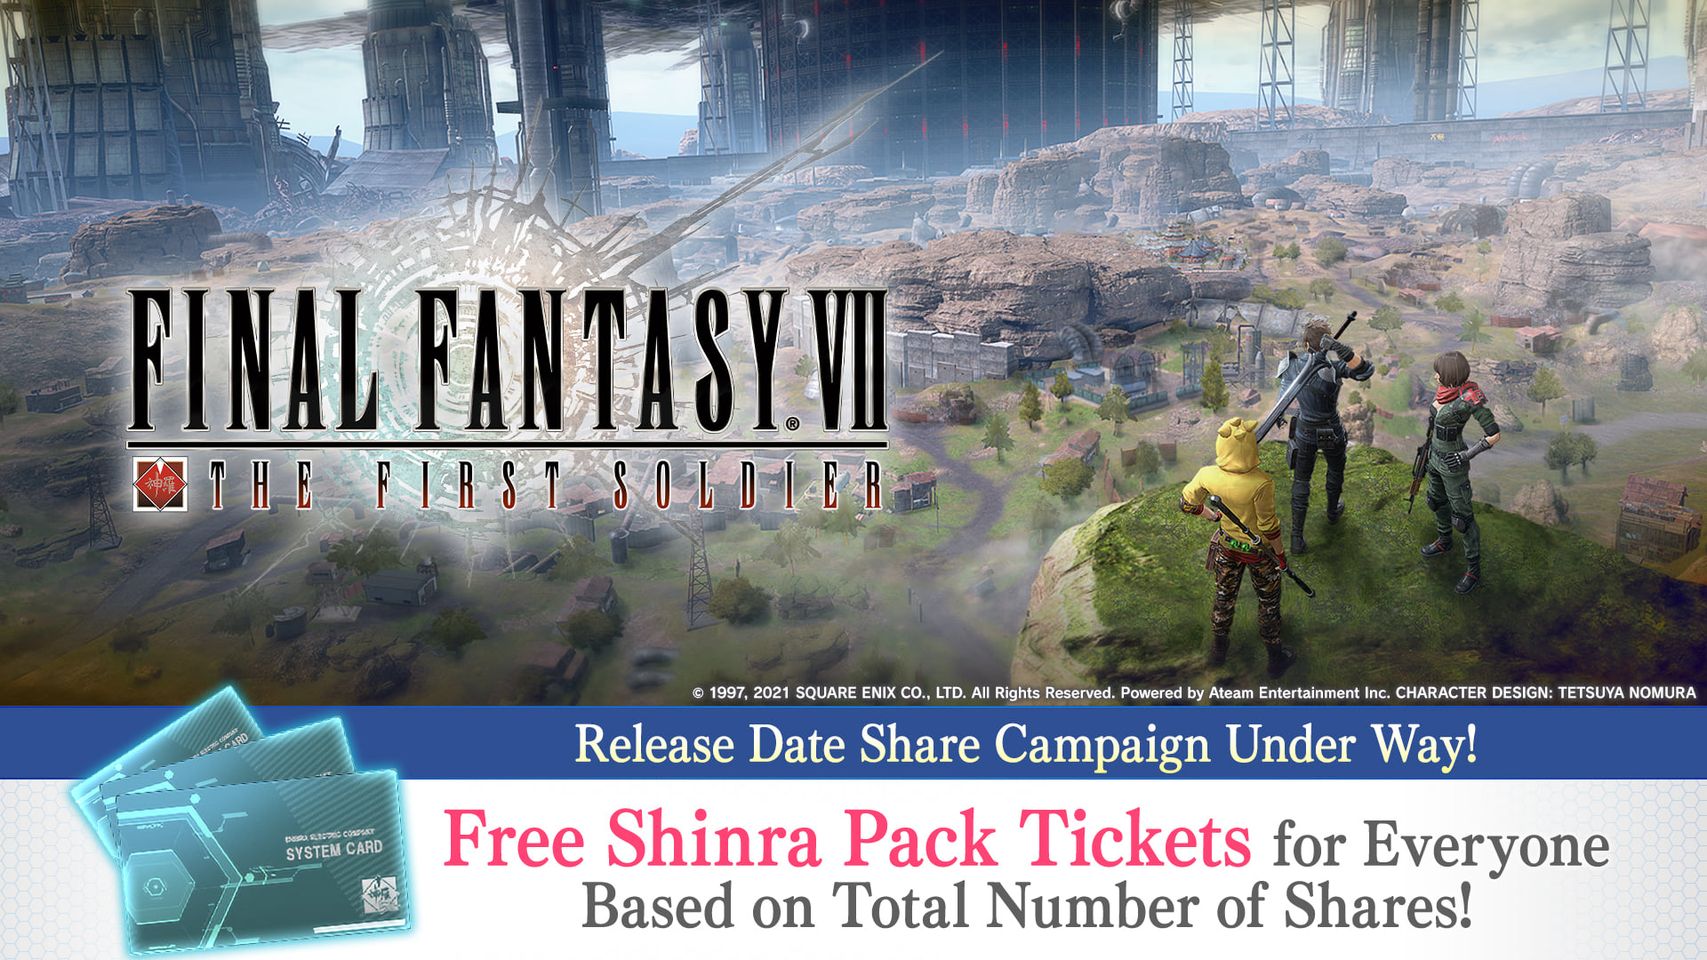 Final Fantasy VII The First Soldier: Дата выхода &  Поделиться кампанией